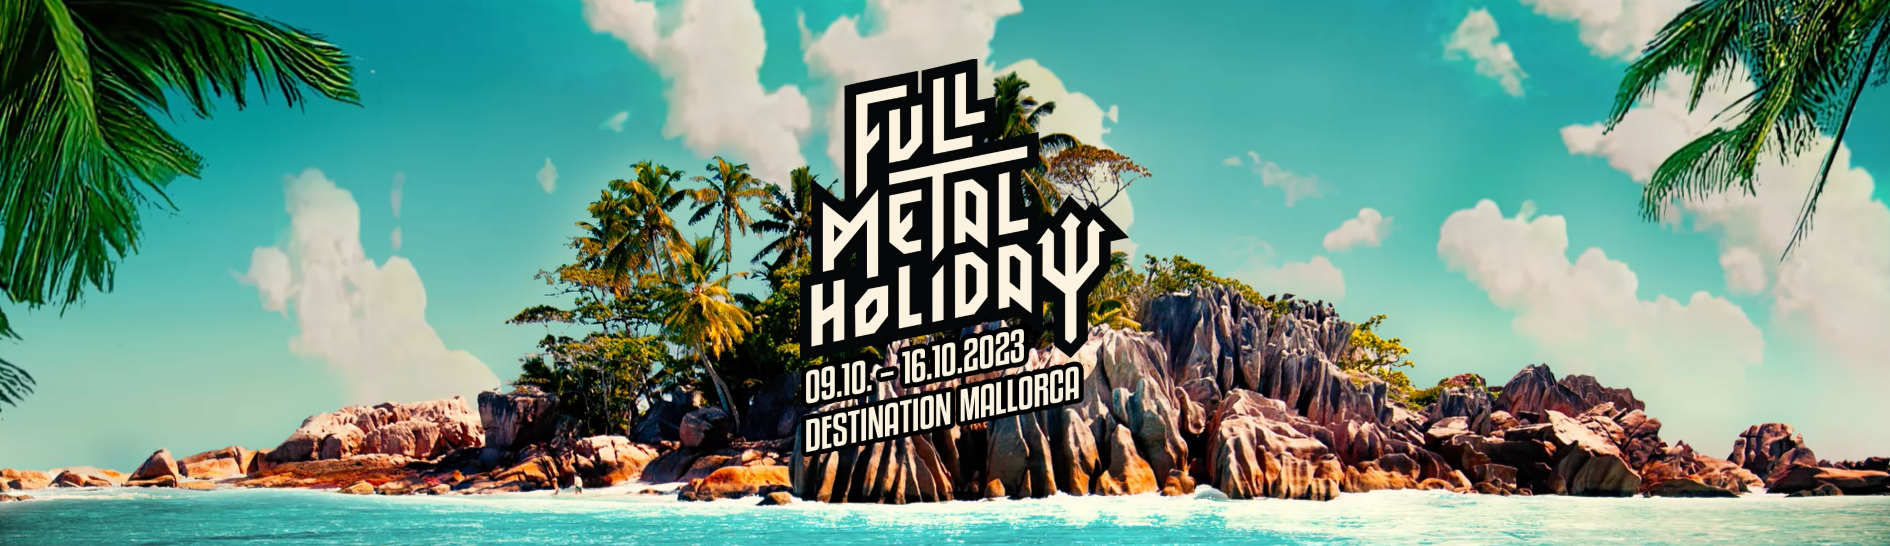 Full Metal Holiday 2023